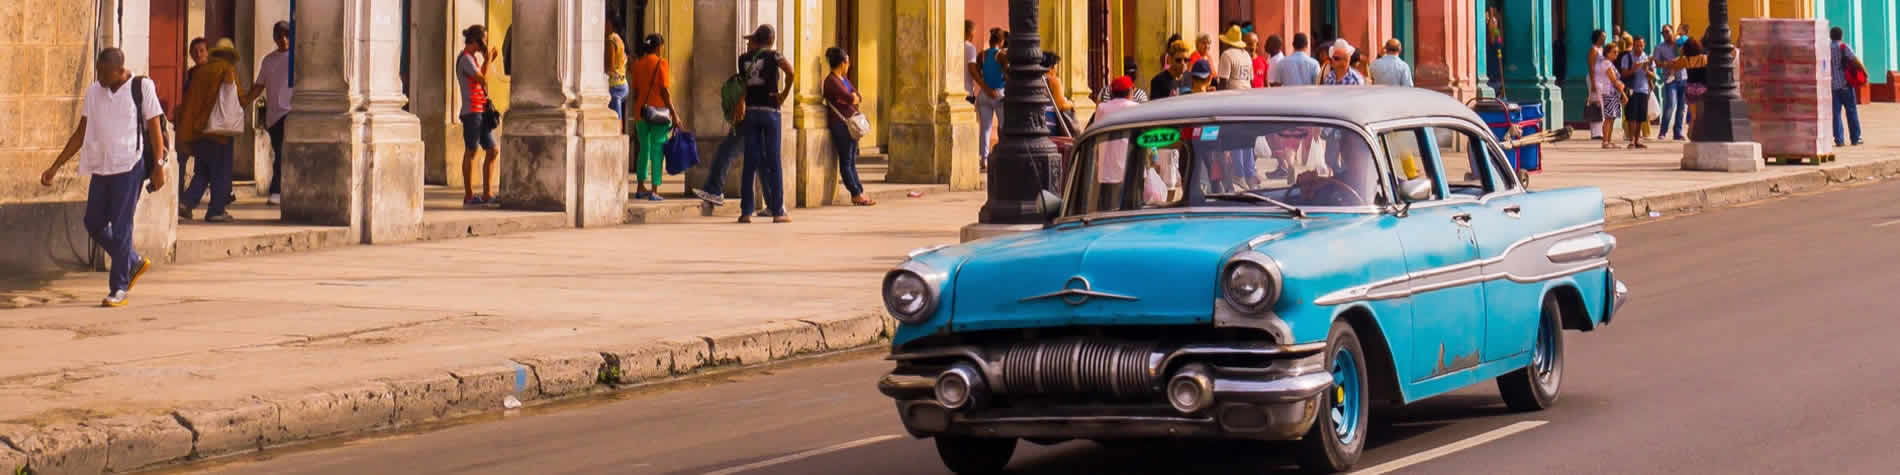 Old American car in Old Havana